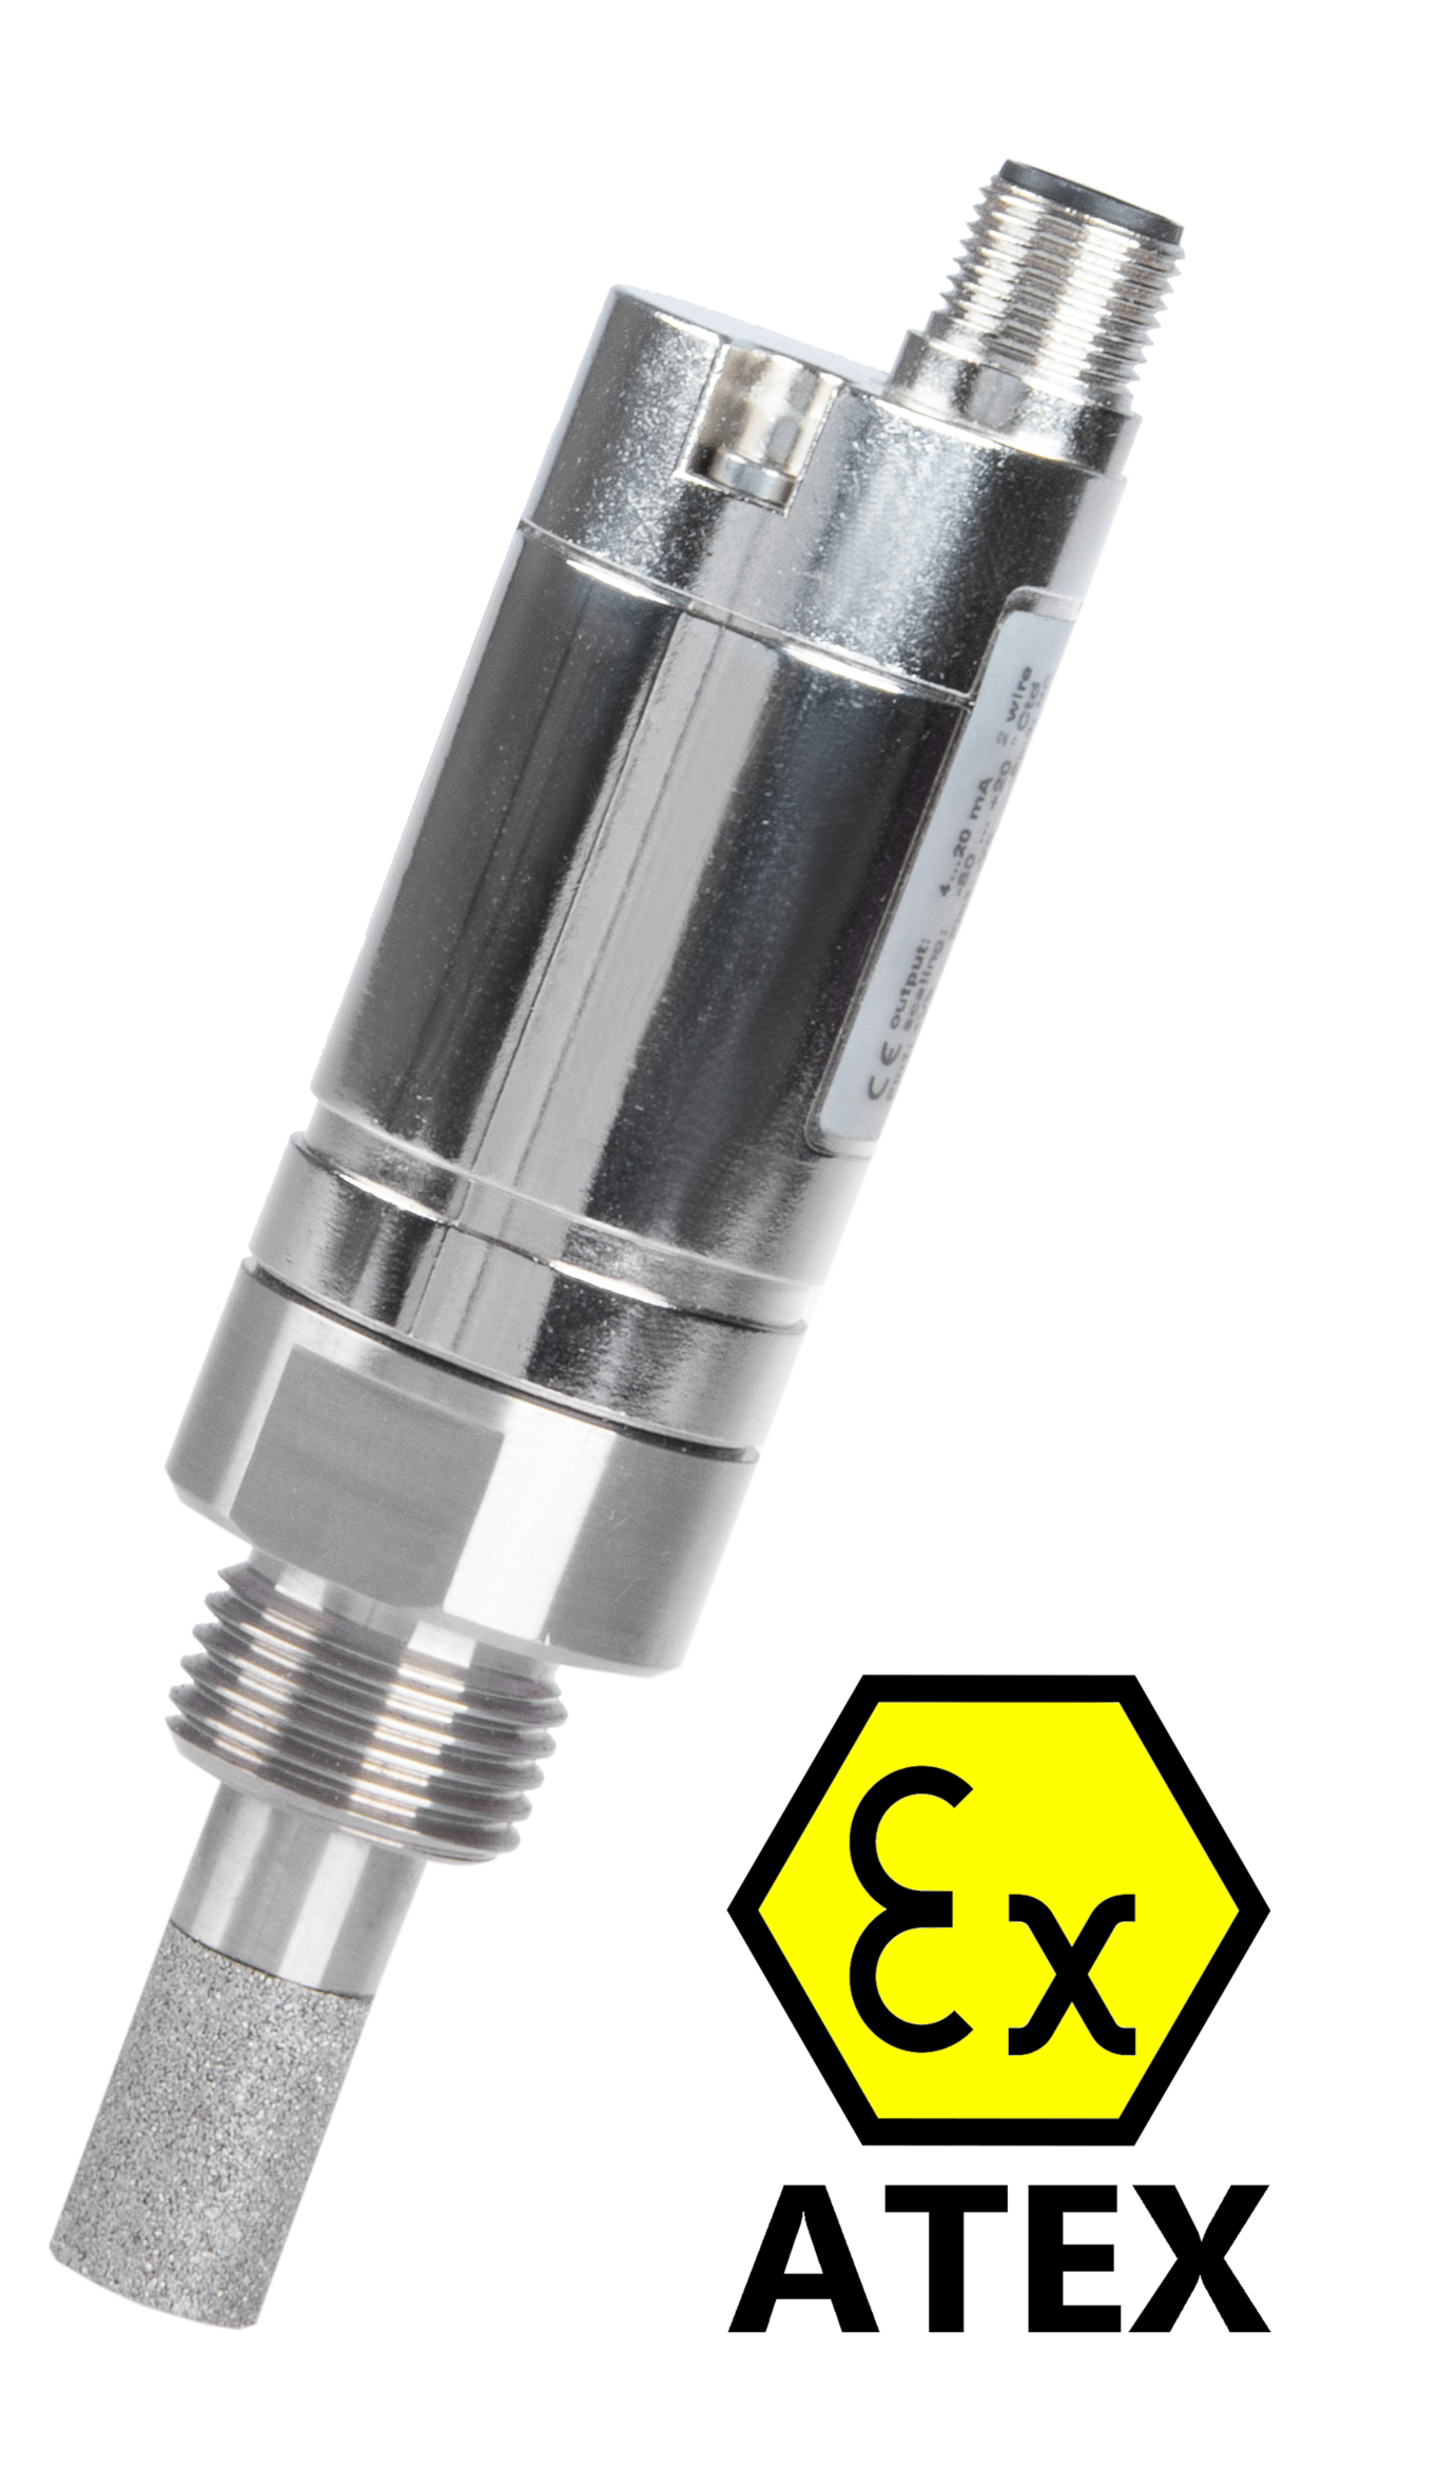 ATEX izinli çiğlenme noktası sensörü FA 515 - Ex